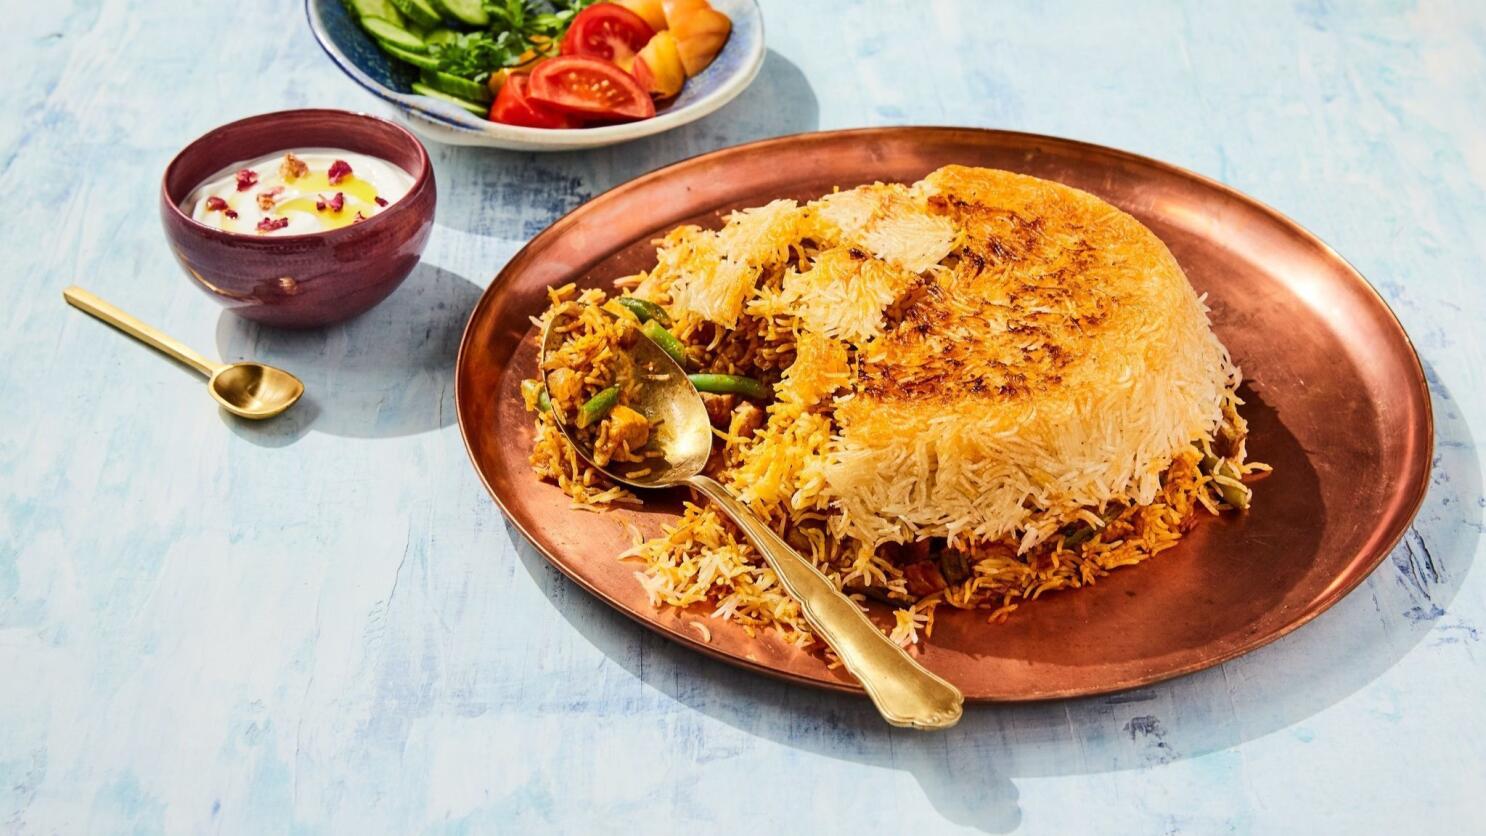 Pars Rice Cooker  Buy Online at Persian Basket